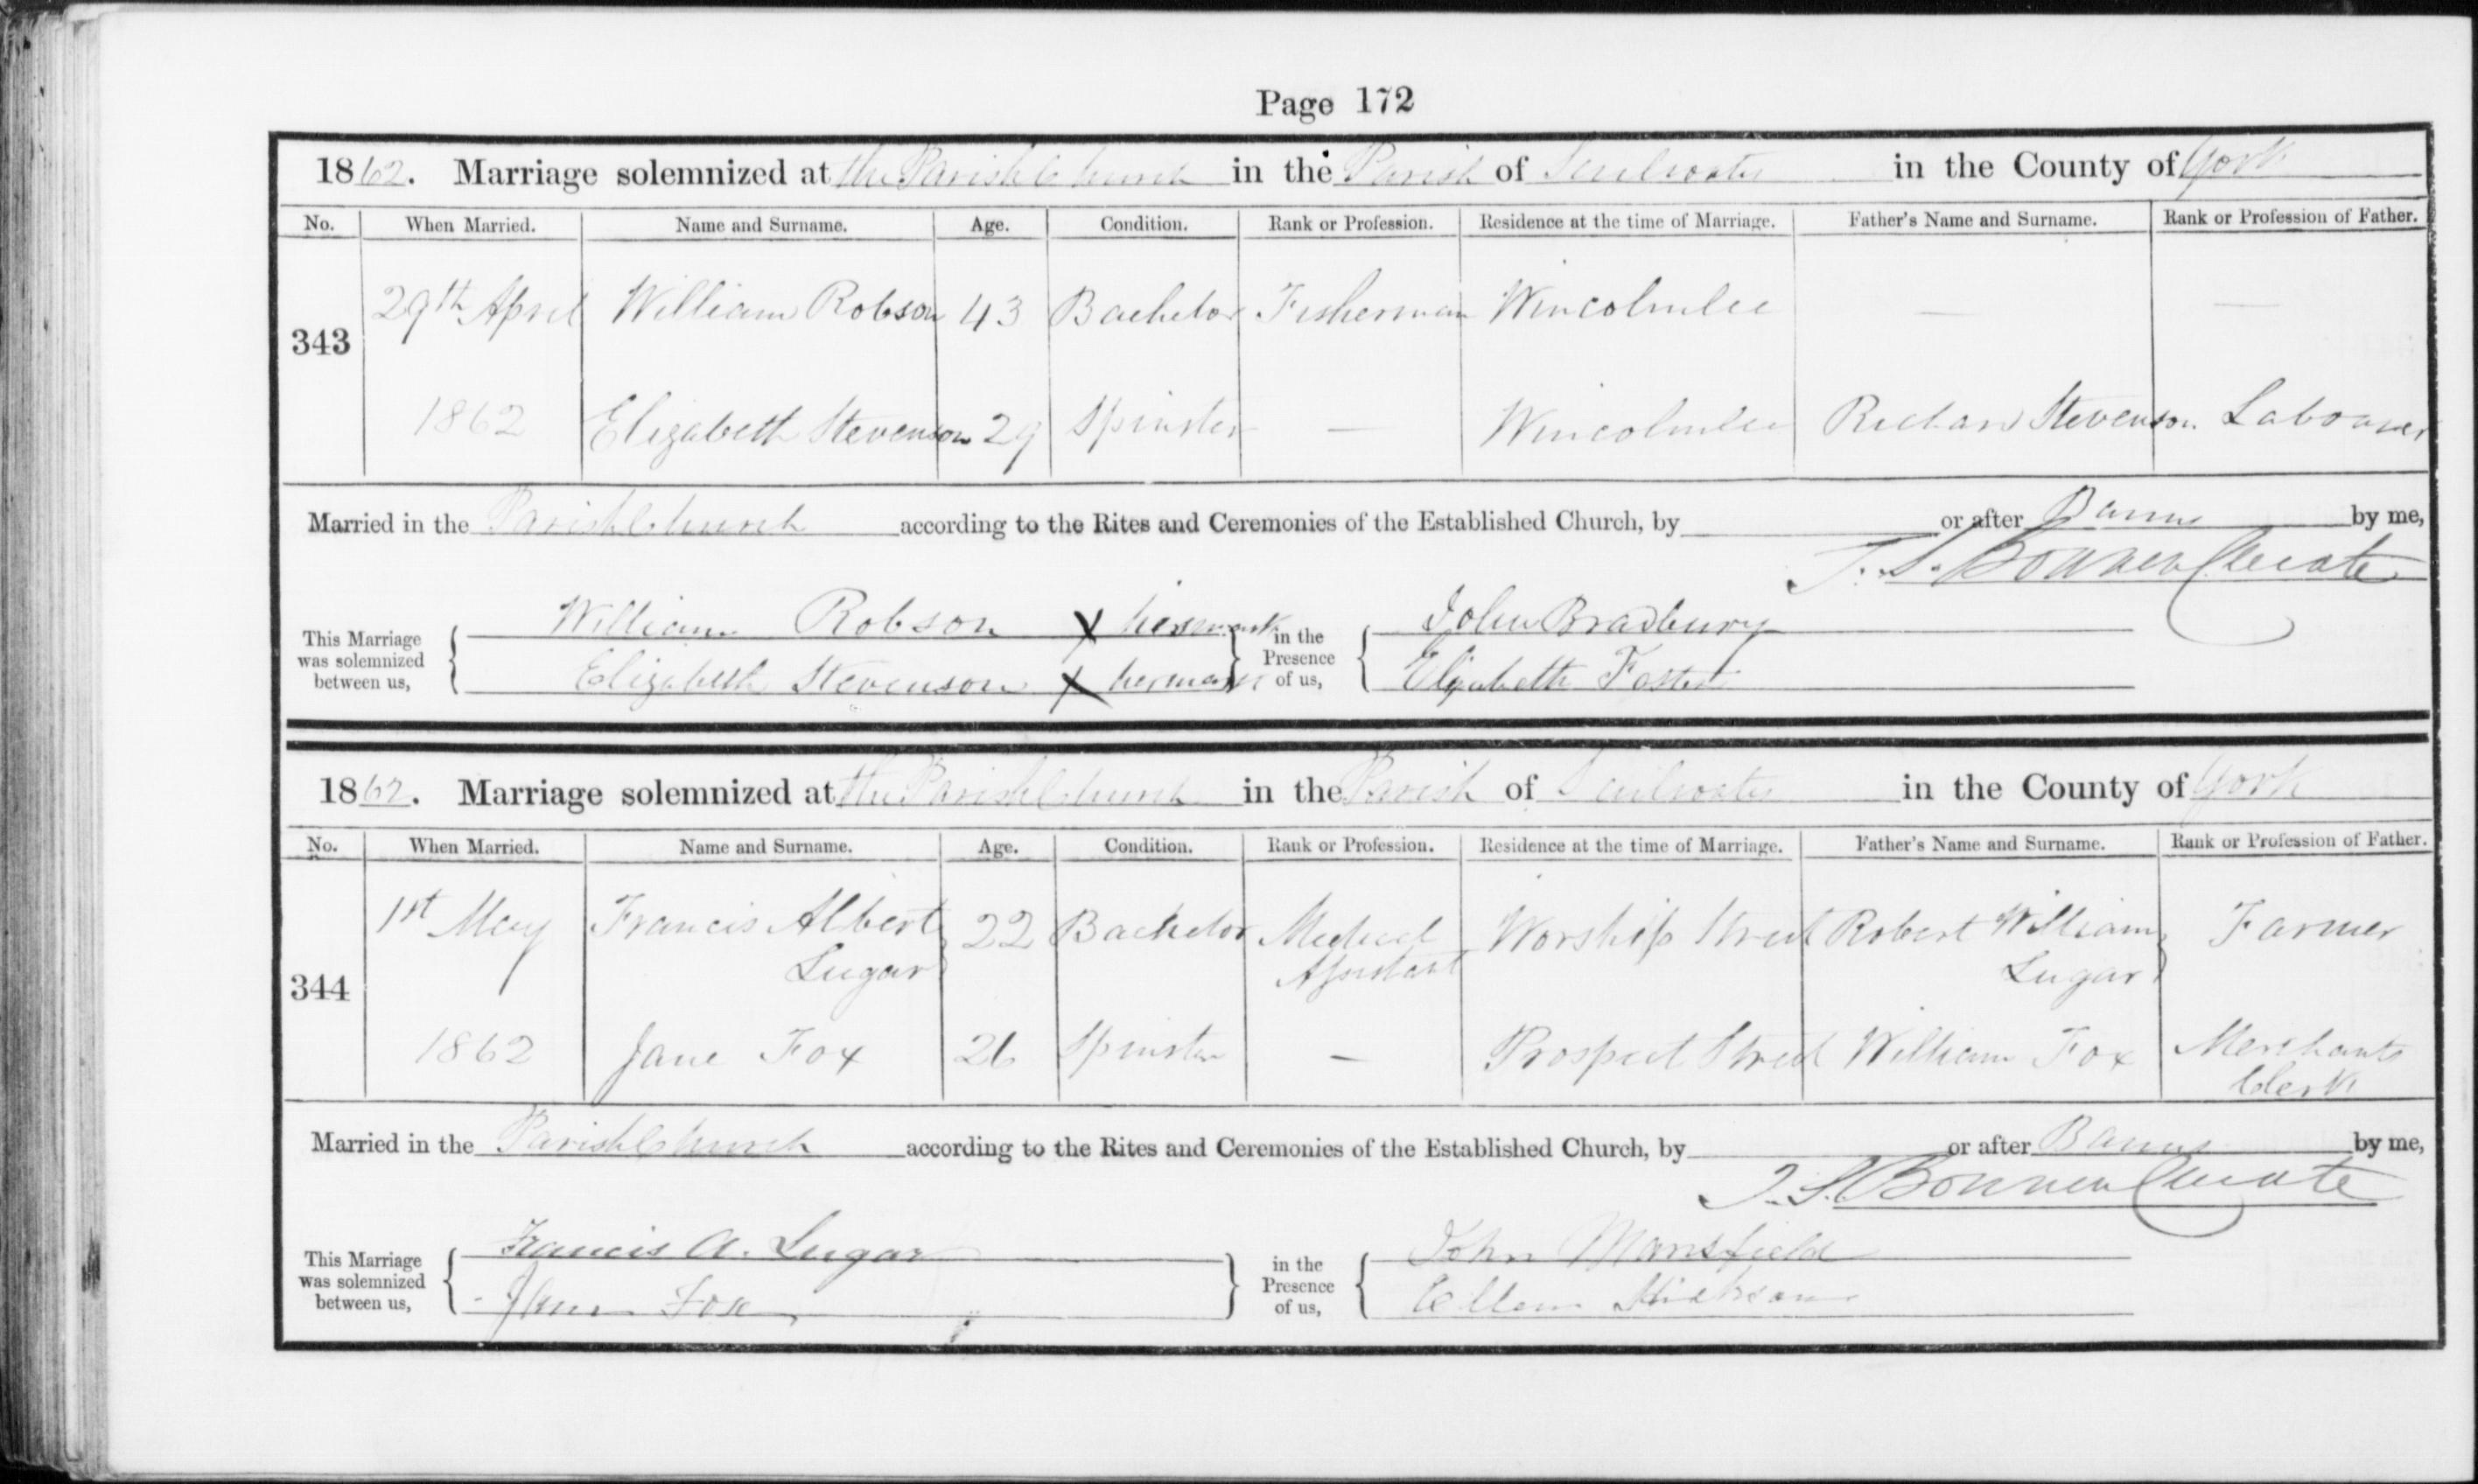 1862 marriage of Jane Fox to Francis Albert Lugar